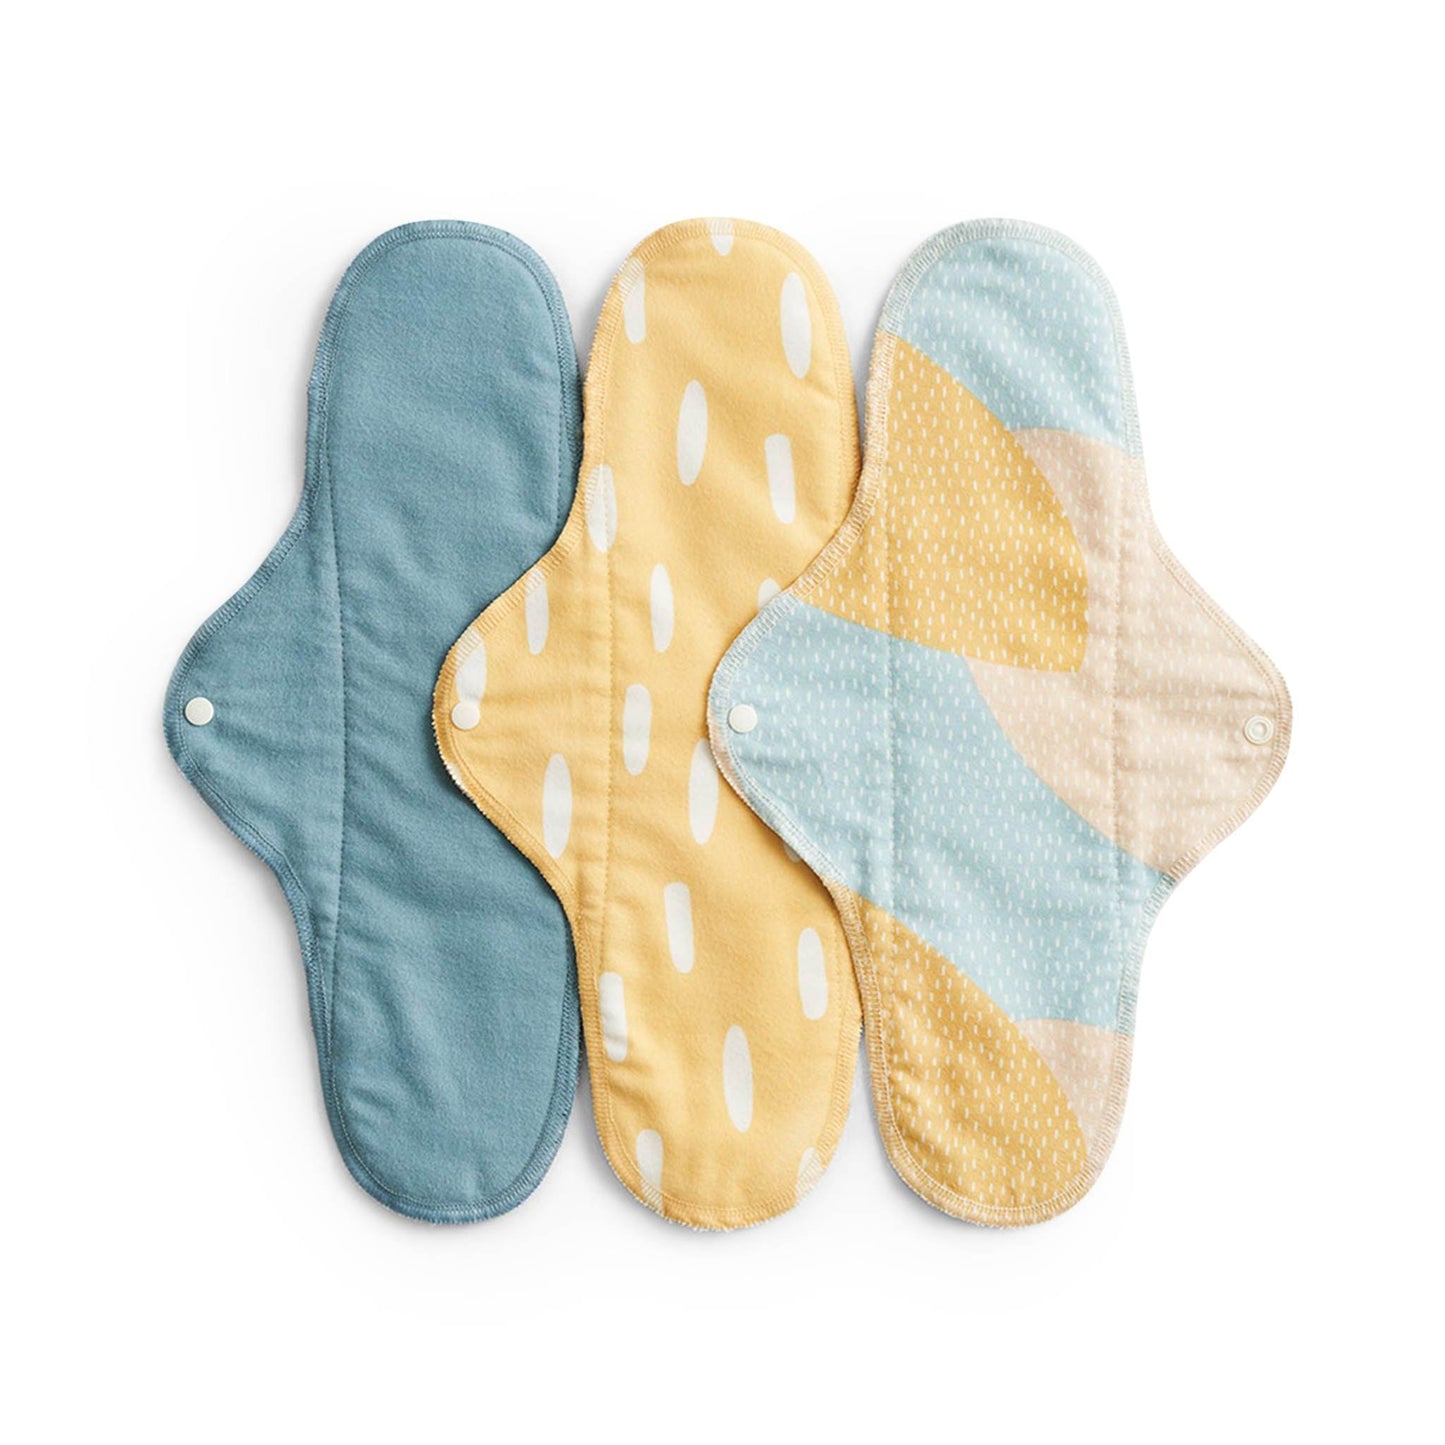 Imse Vimse Period Care Reusable Cloth Sanitary Pad - Night- 3pk - Imse Vimse